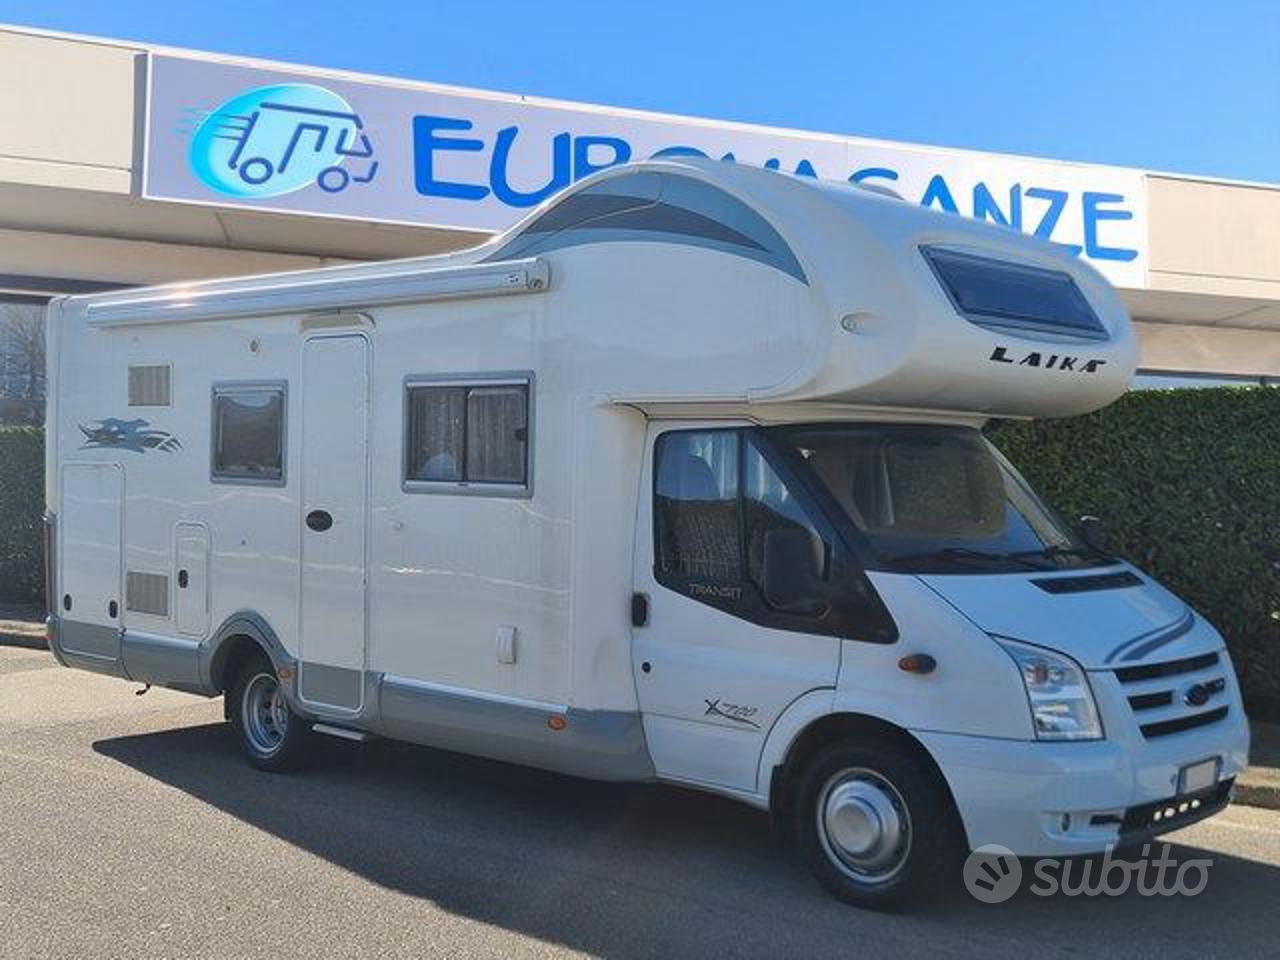 Subito - Euro-vacanze srl - LAIKA X 700 - Caravan e Camper In vendita a  Novara